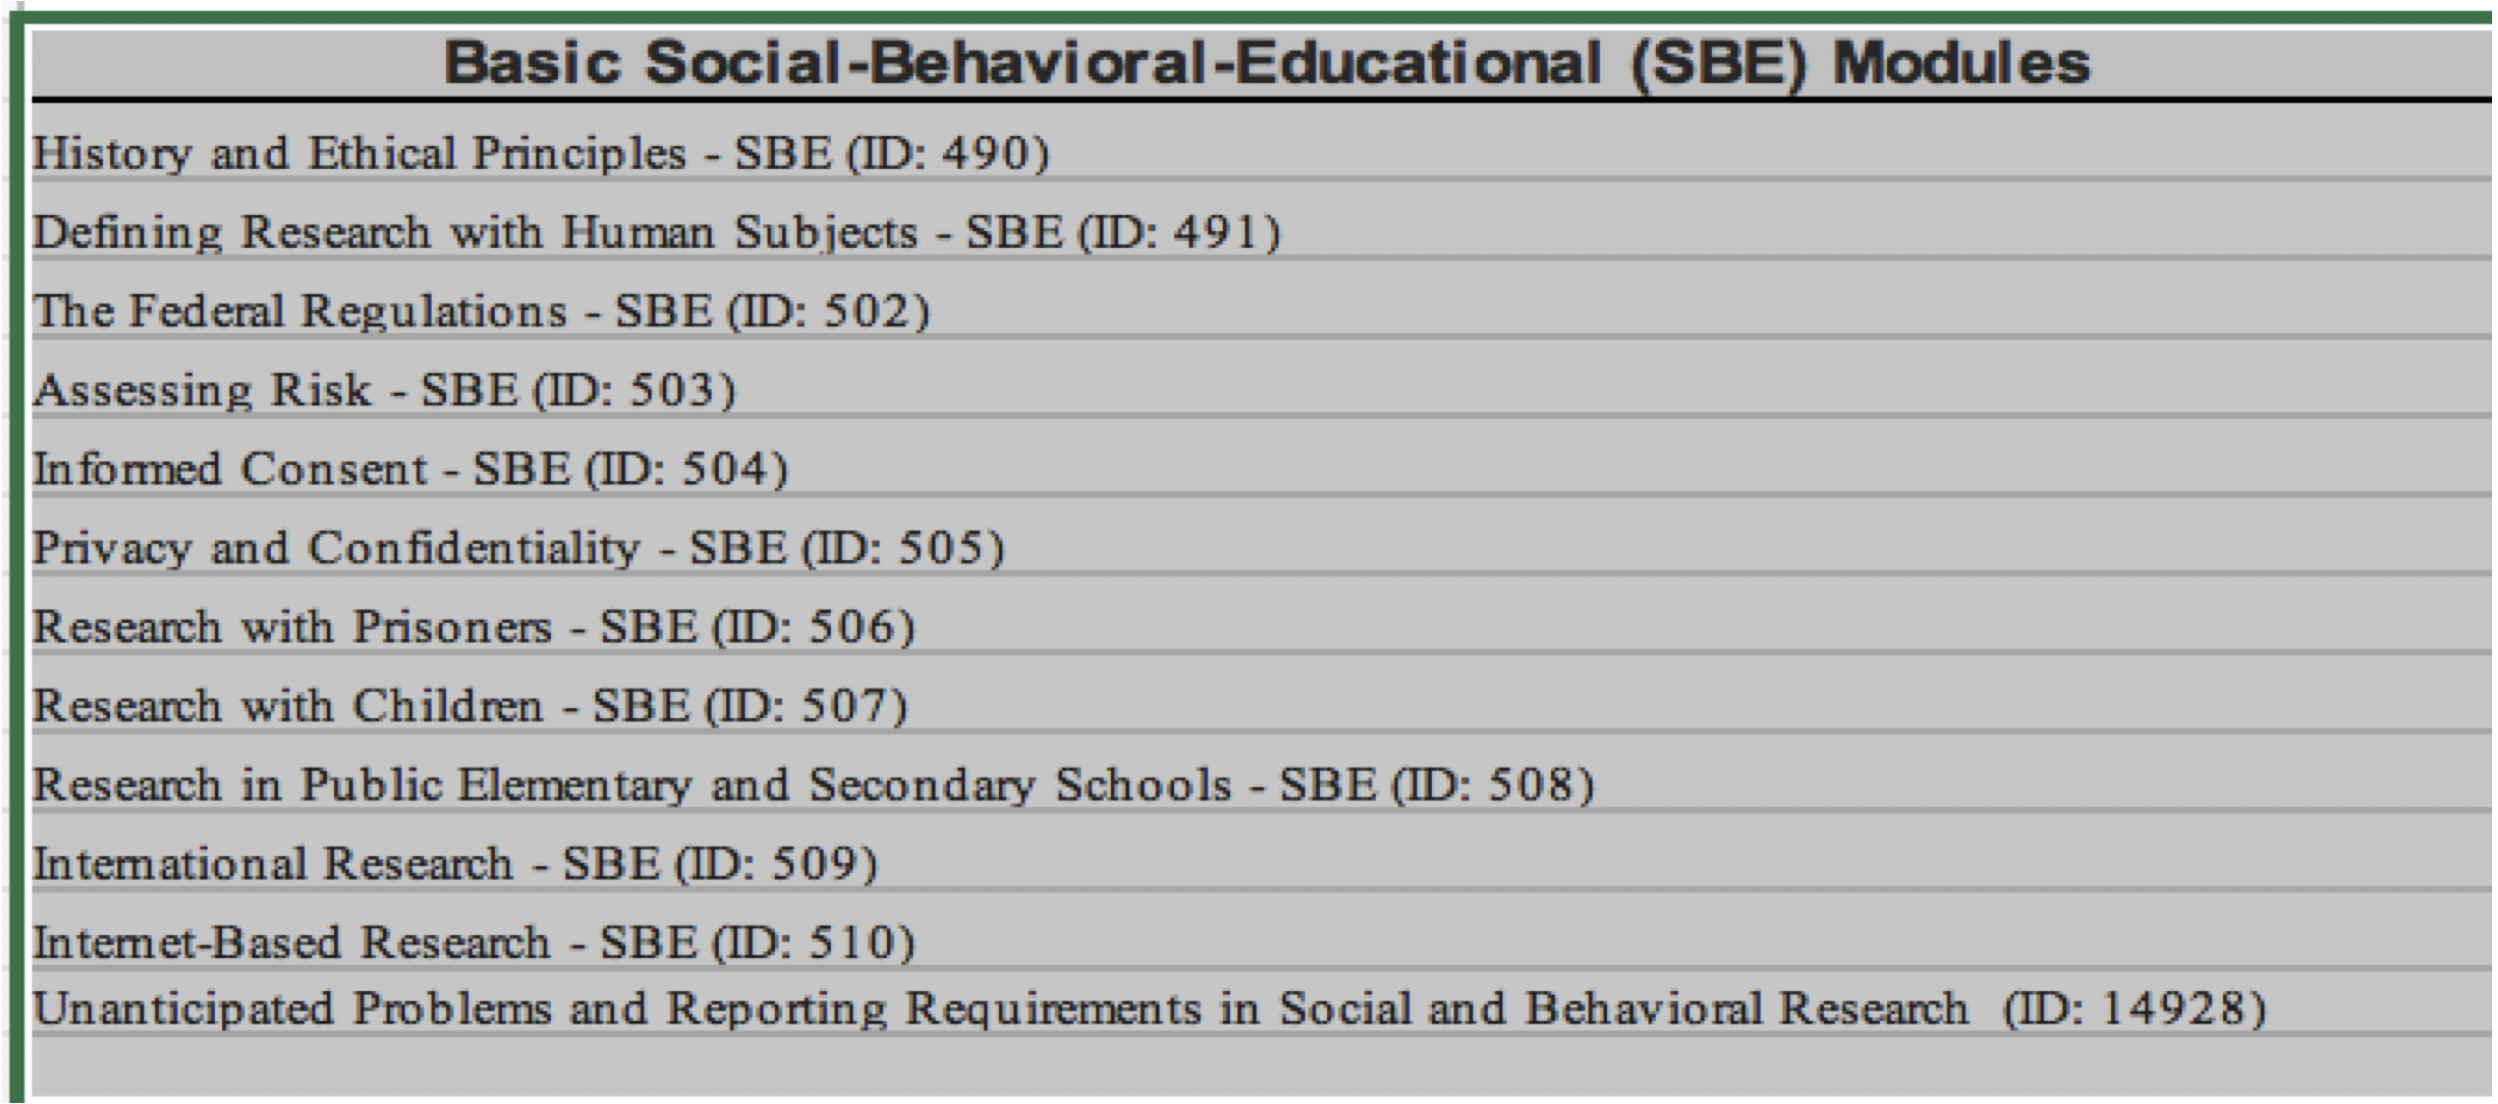 screen shot showing available social behavior modules